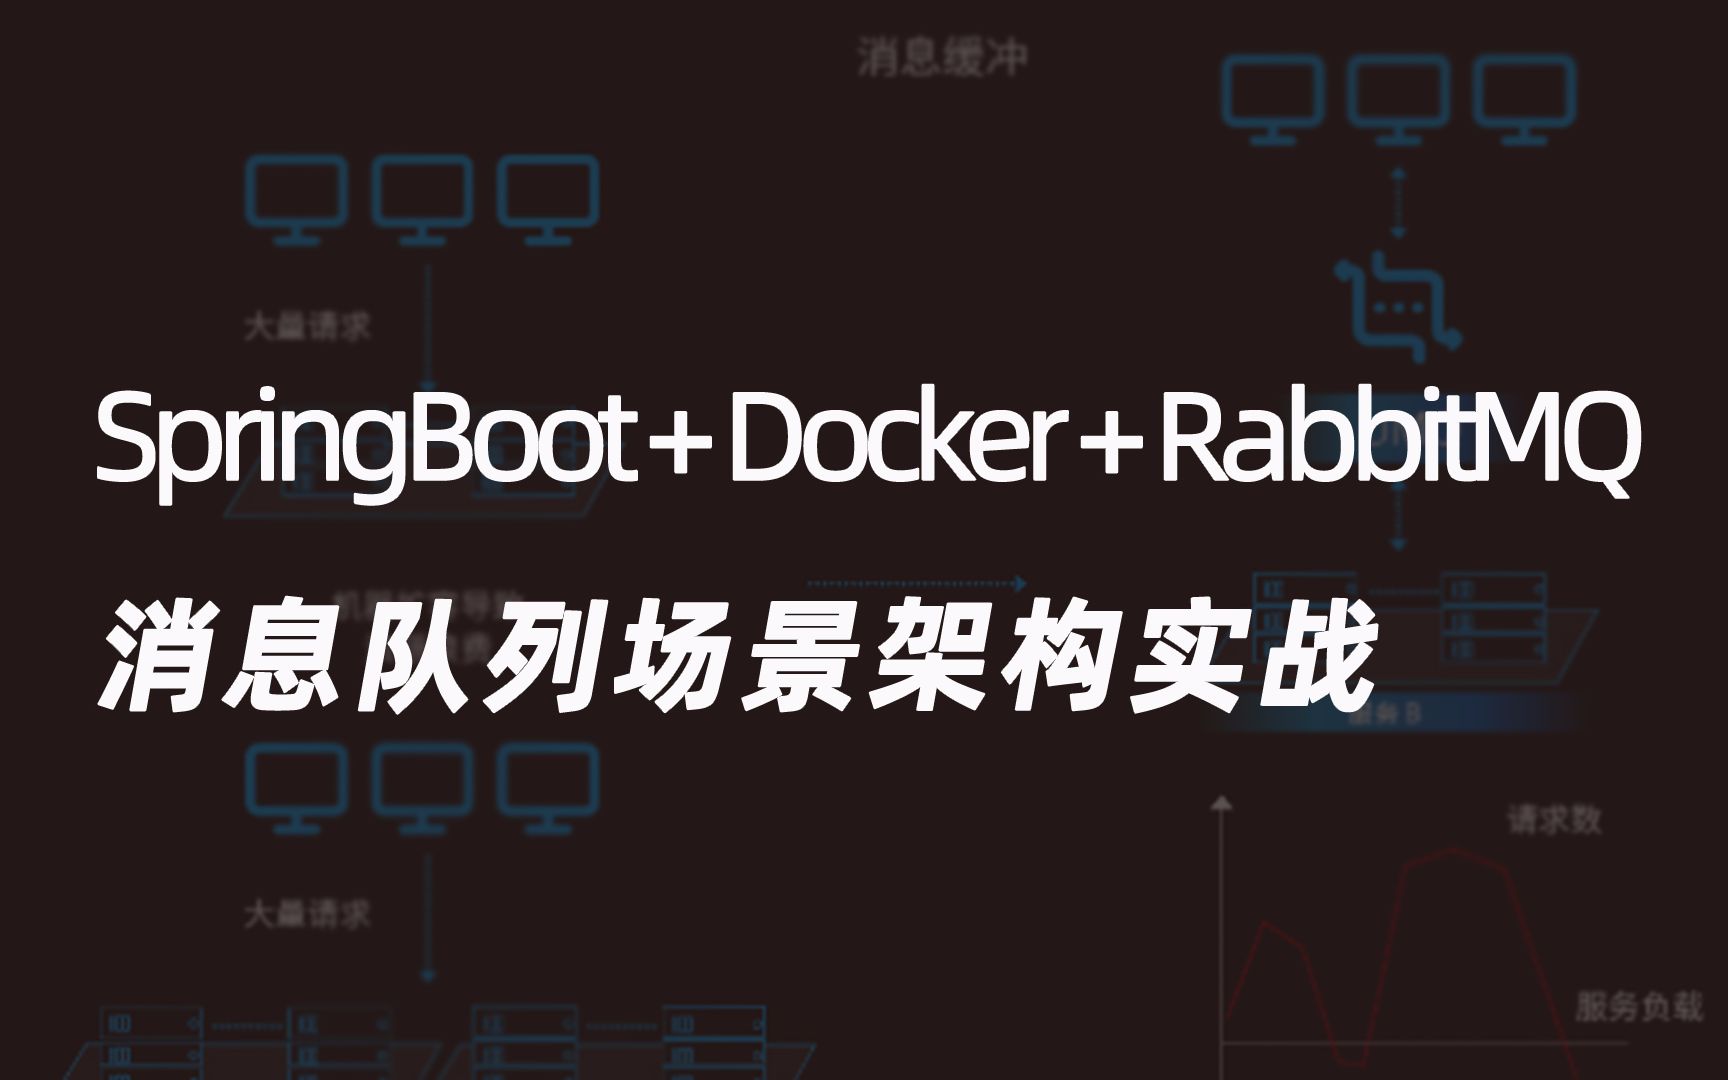 SpringBoot + Docker + RabbitMQ消息队列场景架构实战